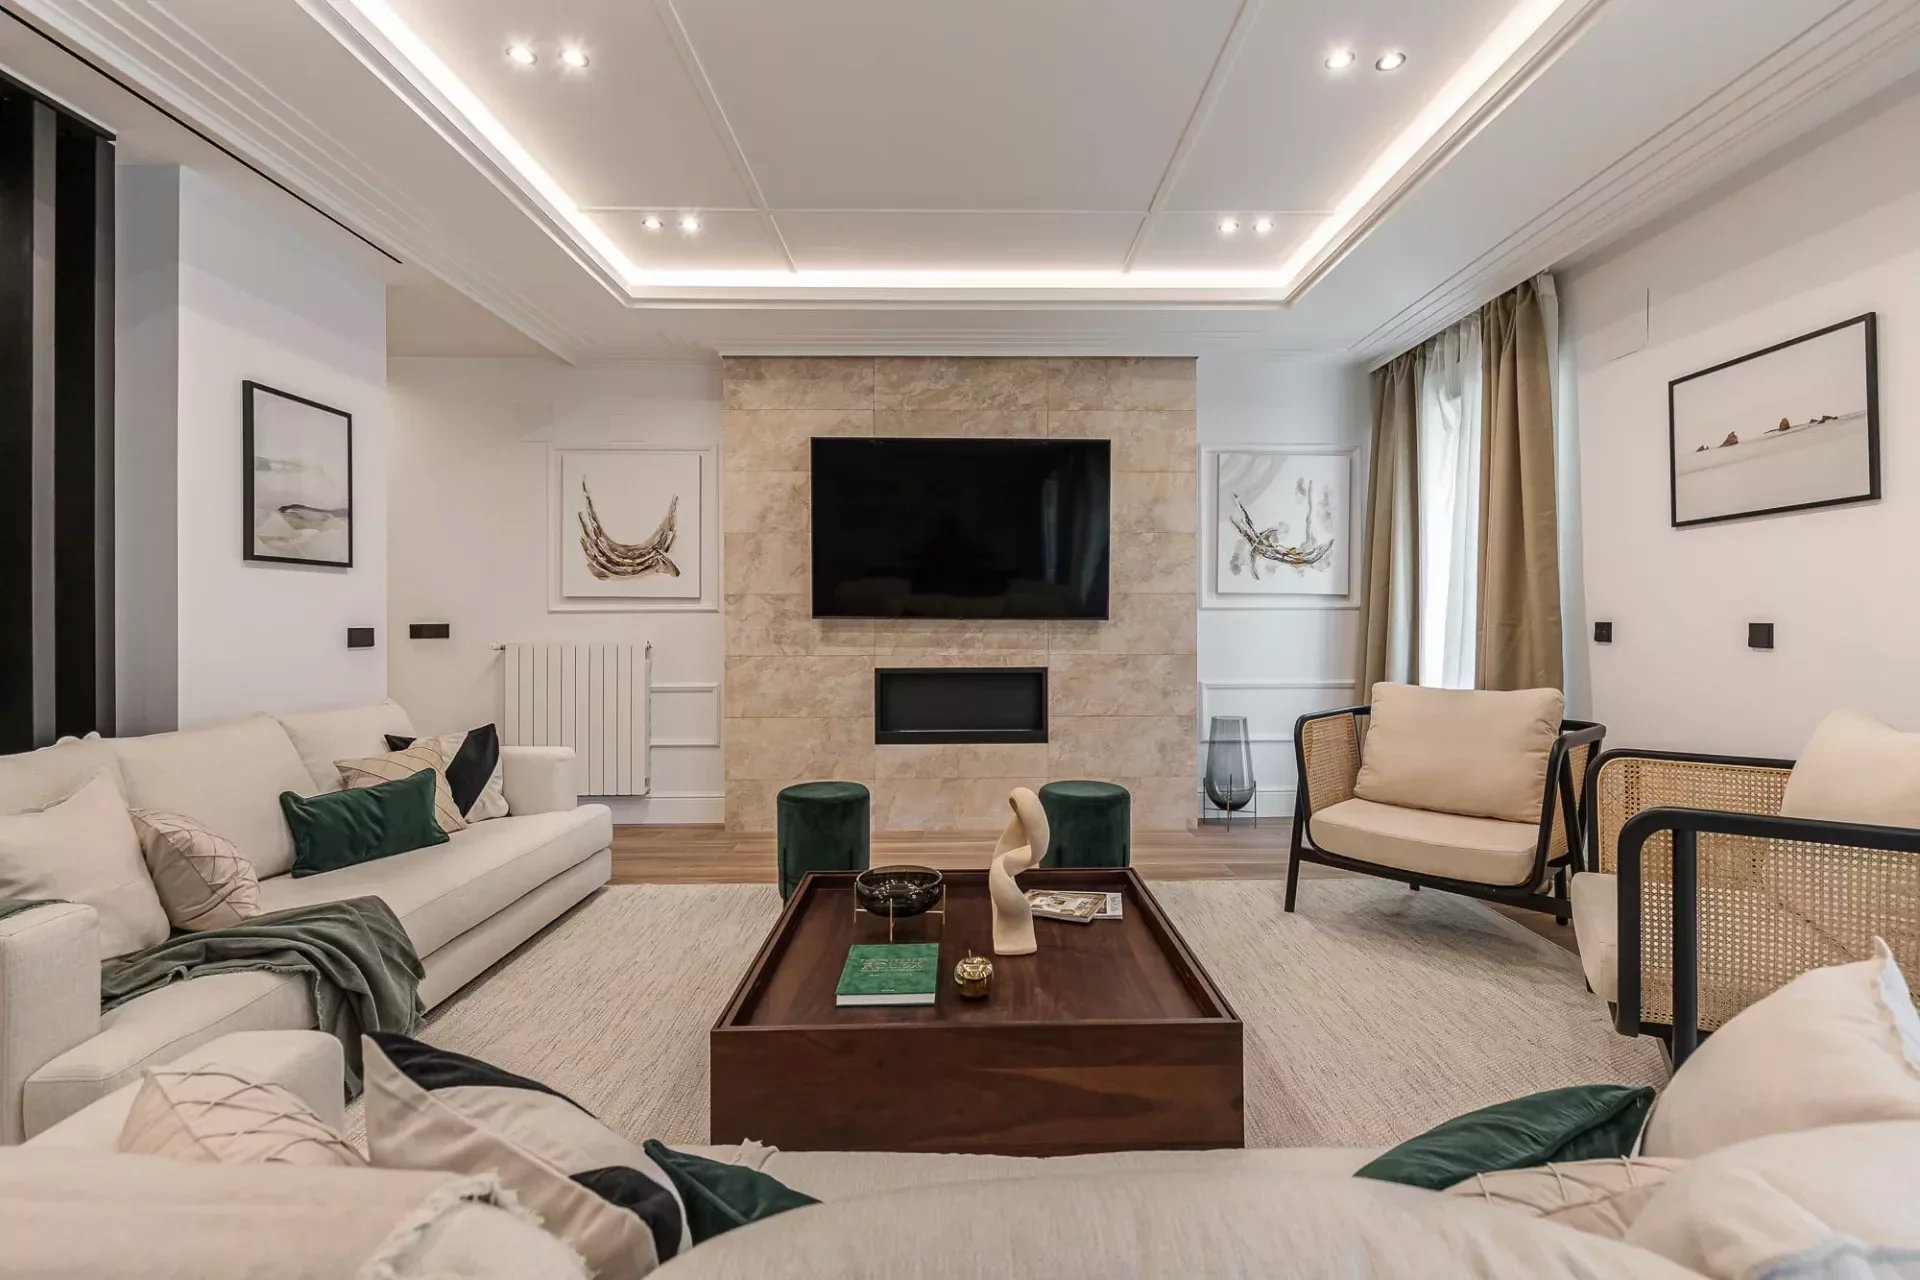 Madrid - Goya - Barrio Salamanca - Appartement flambant neuf avec 3 chambres en suite.